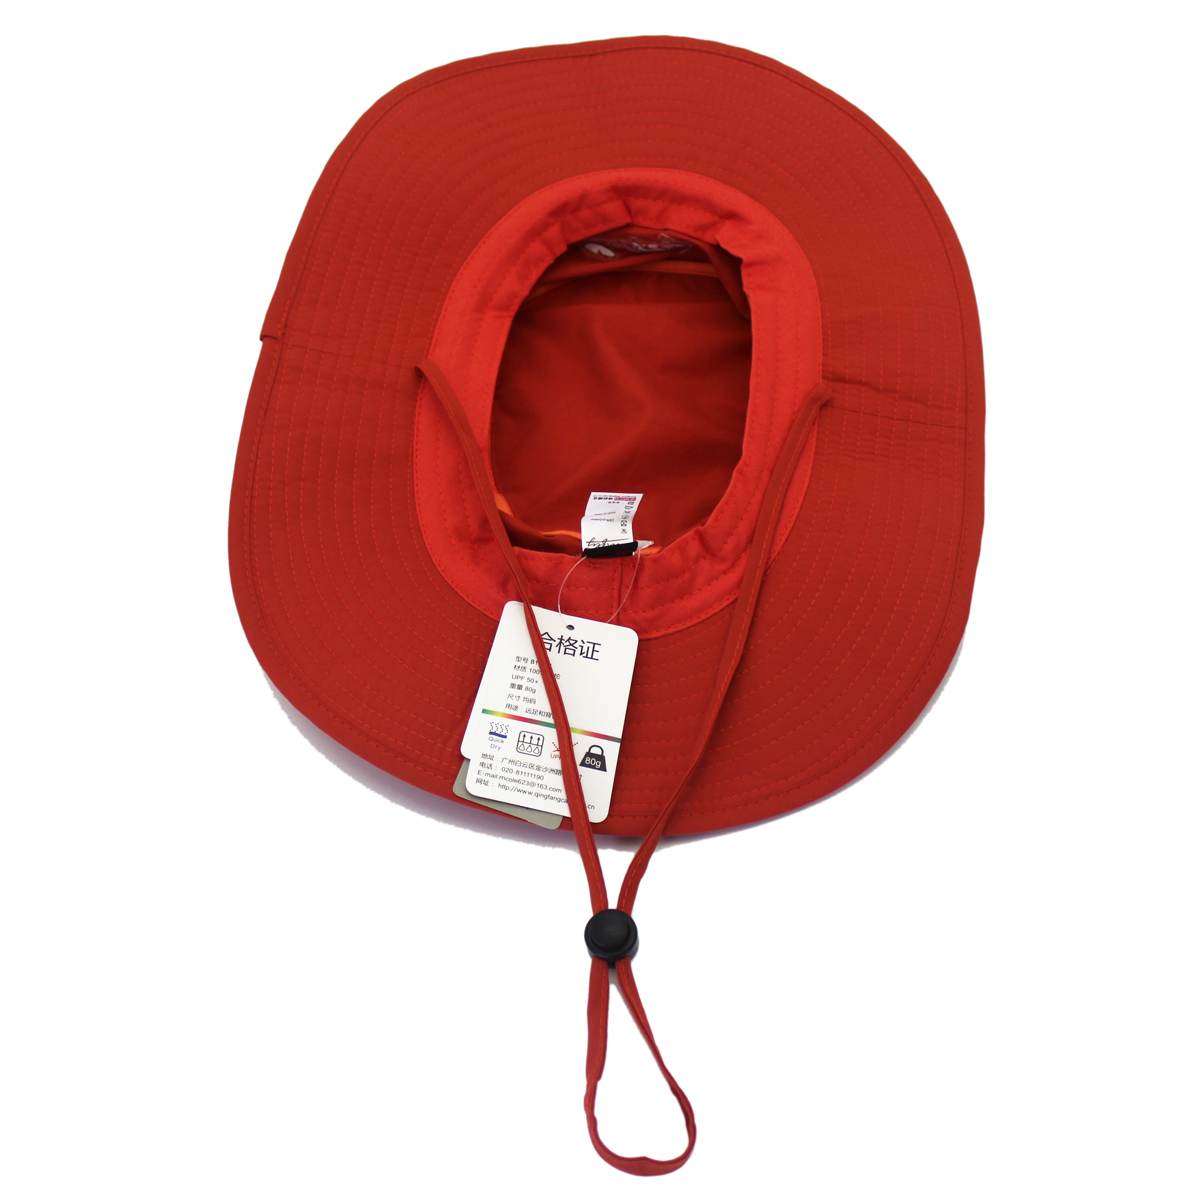 Unisex-Mountaineering-Fishing-Mesh-Cap-Bucket-Folding-Outdooors-Sun-Hat-1131321